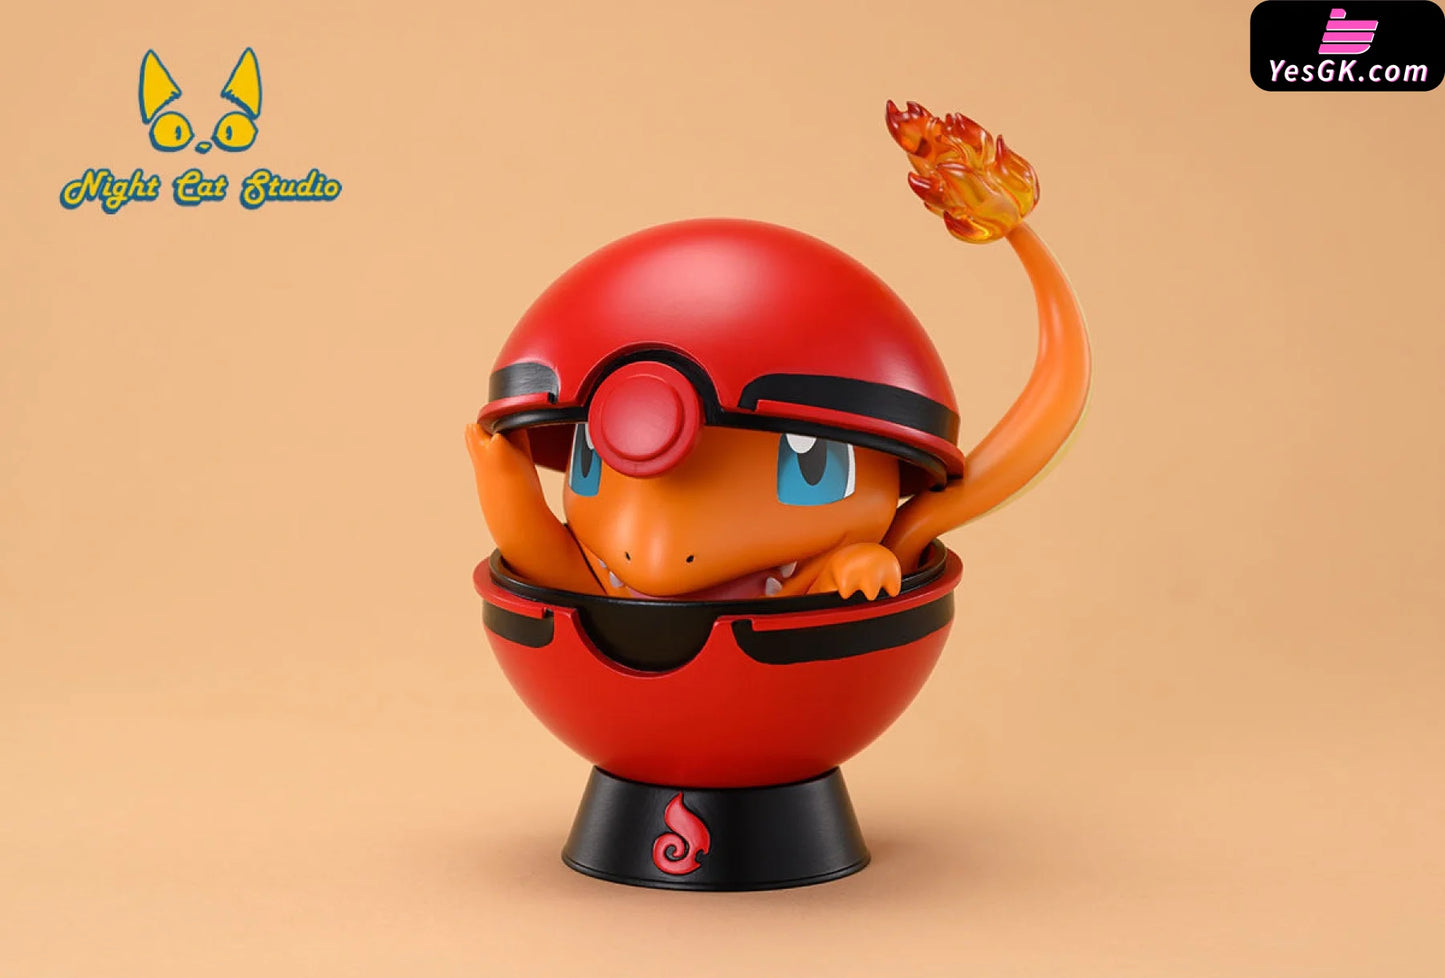 Pokémon Fire And Grass Type Pokeball Resin Statue - Night Cat Studio [Pre-Order]